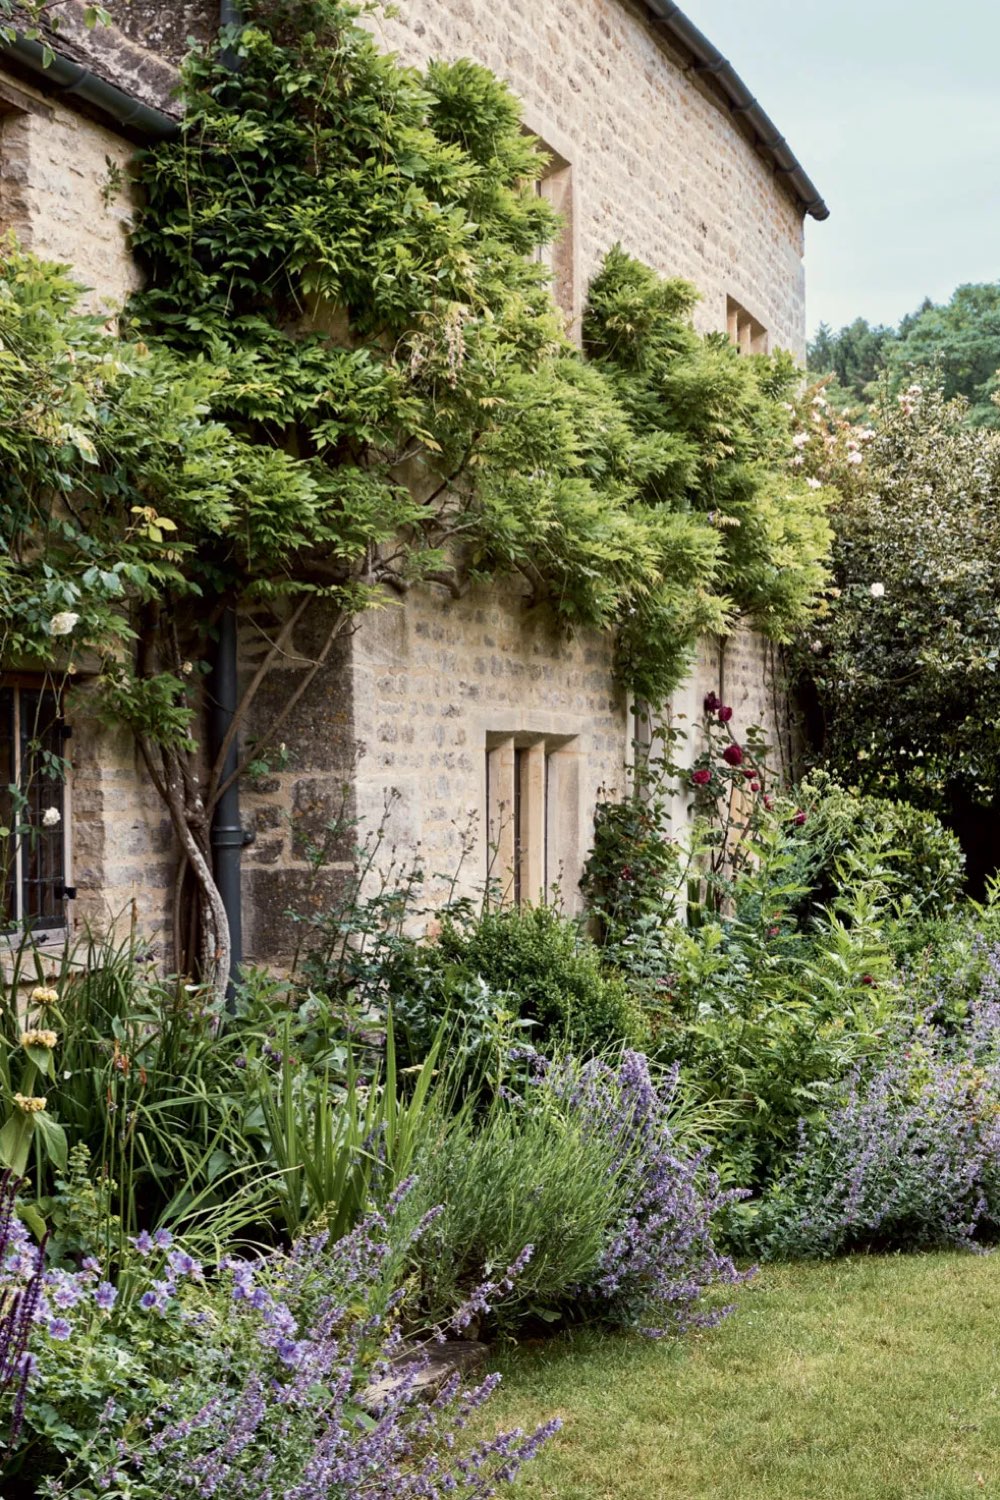 deco cottage anglais 17eme siecle façade en pierre jardin campagne anglaise